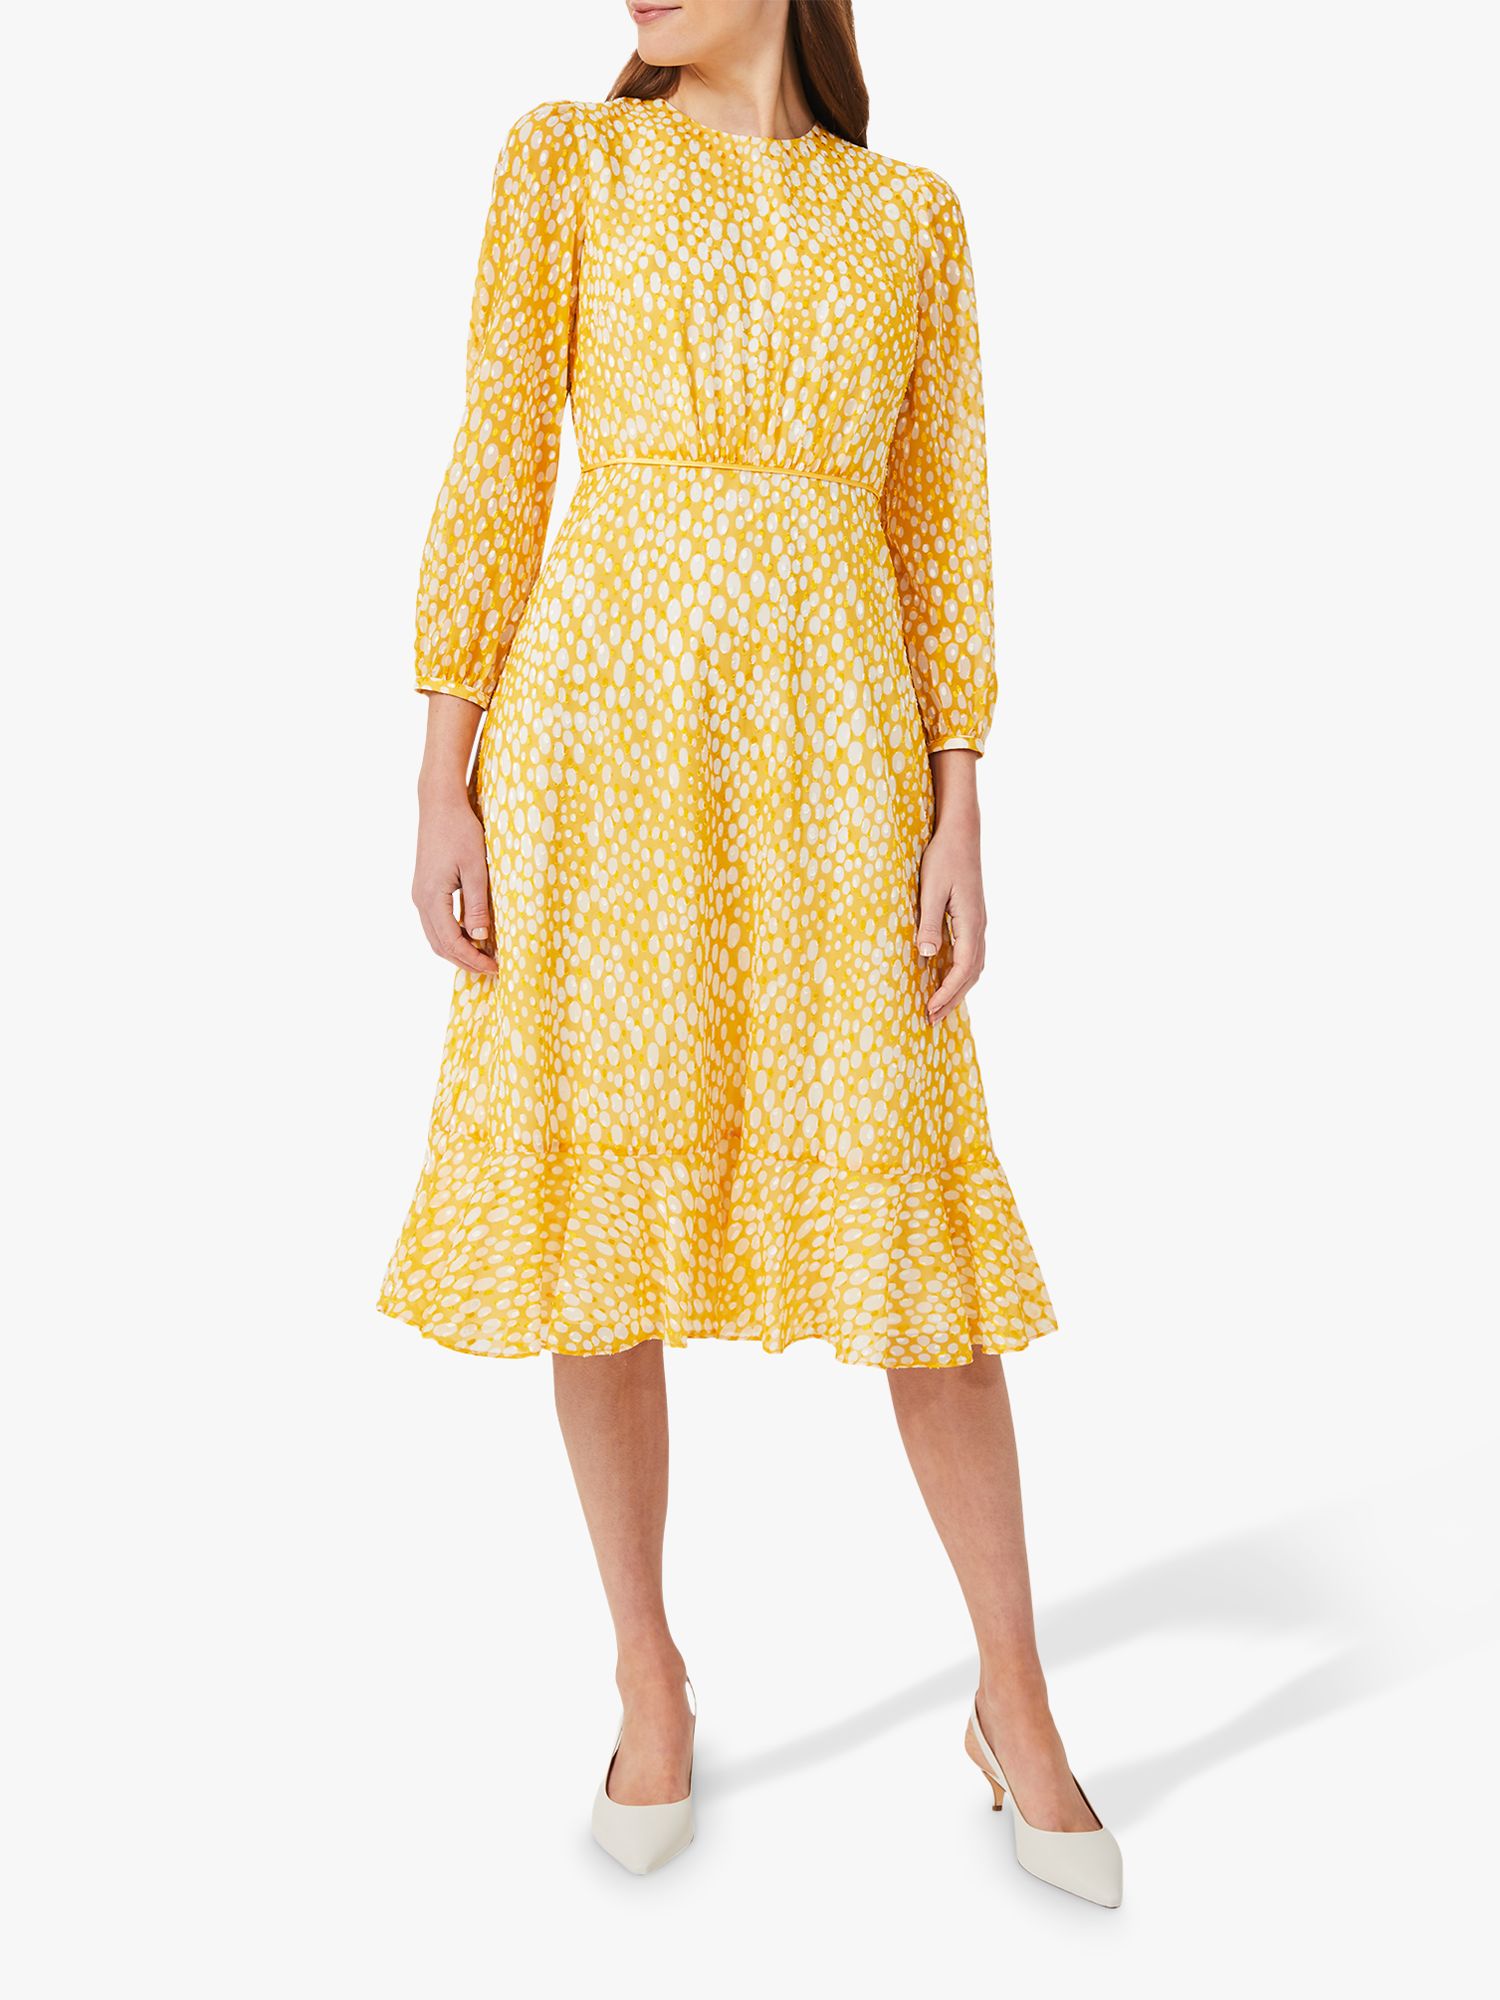 Hobbs Lexi Jacquard Dress, Yellow/Ivory at John Lewis & Partners